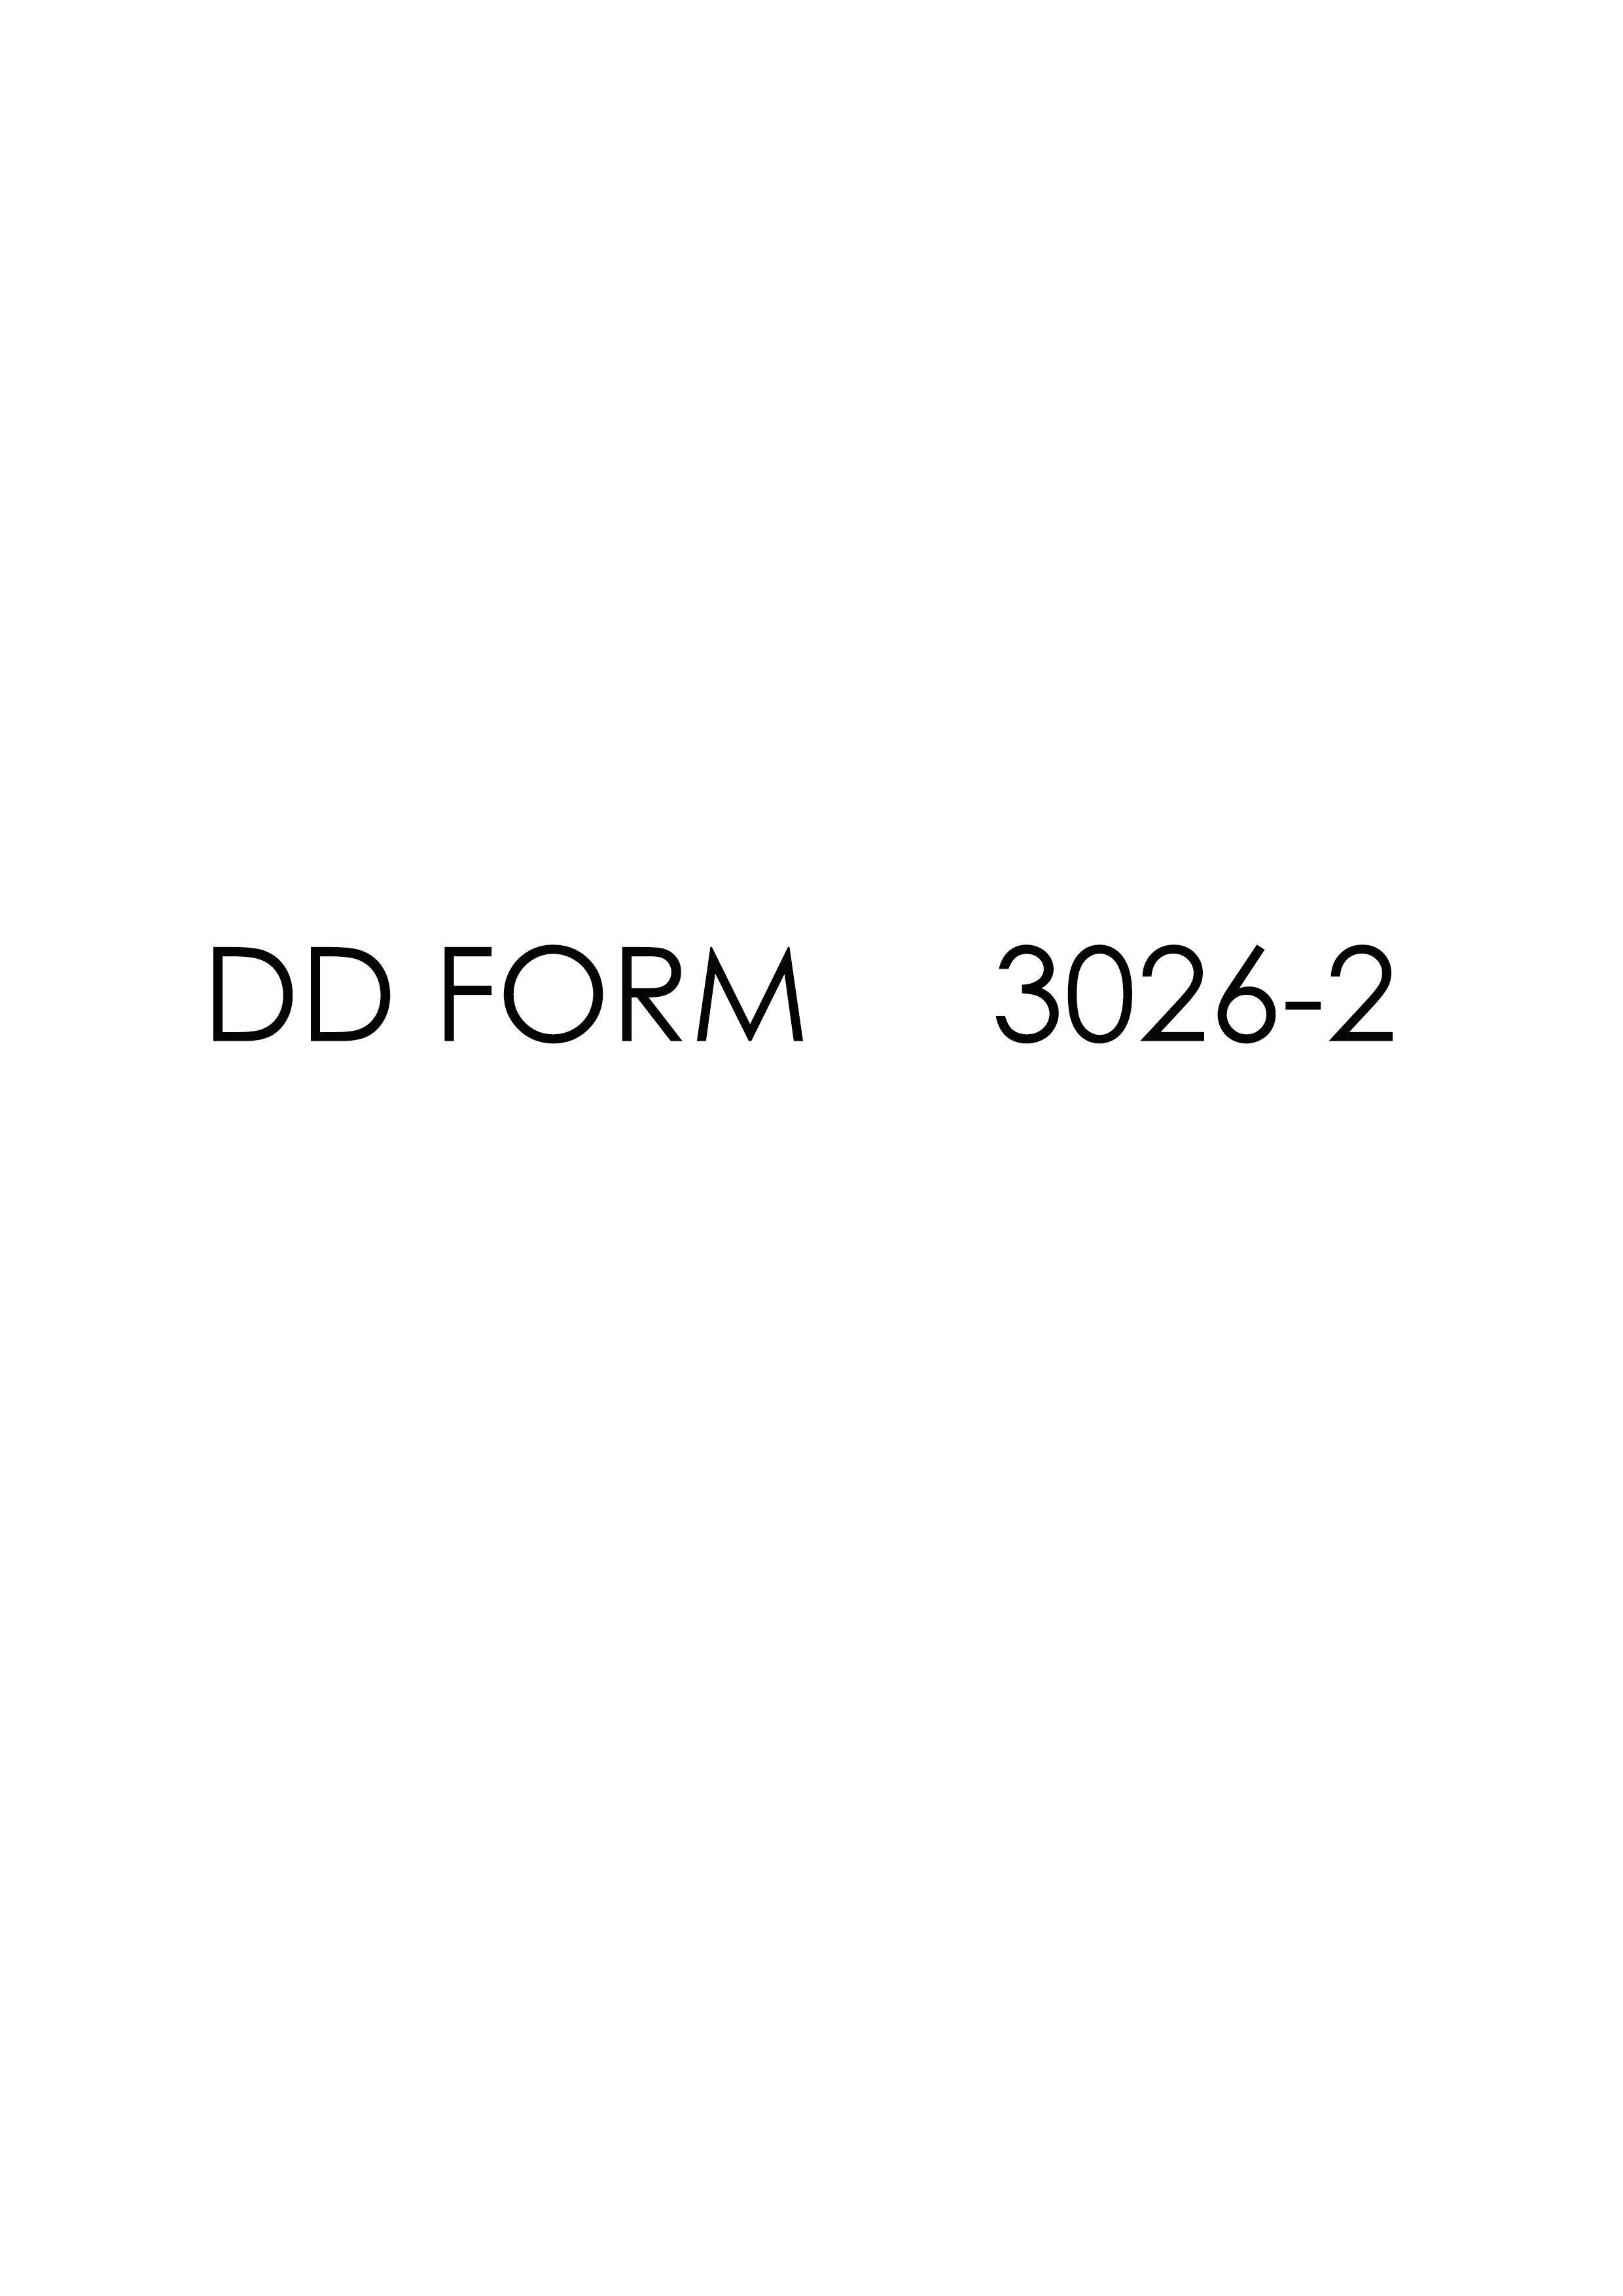 Download dd 3026-2 Form